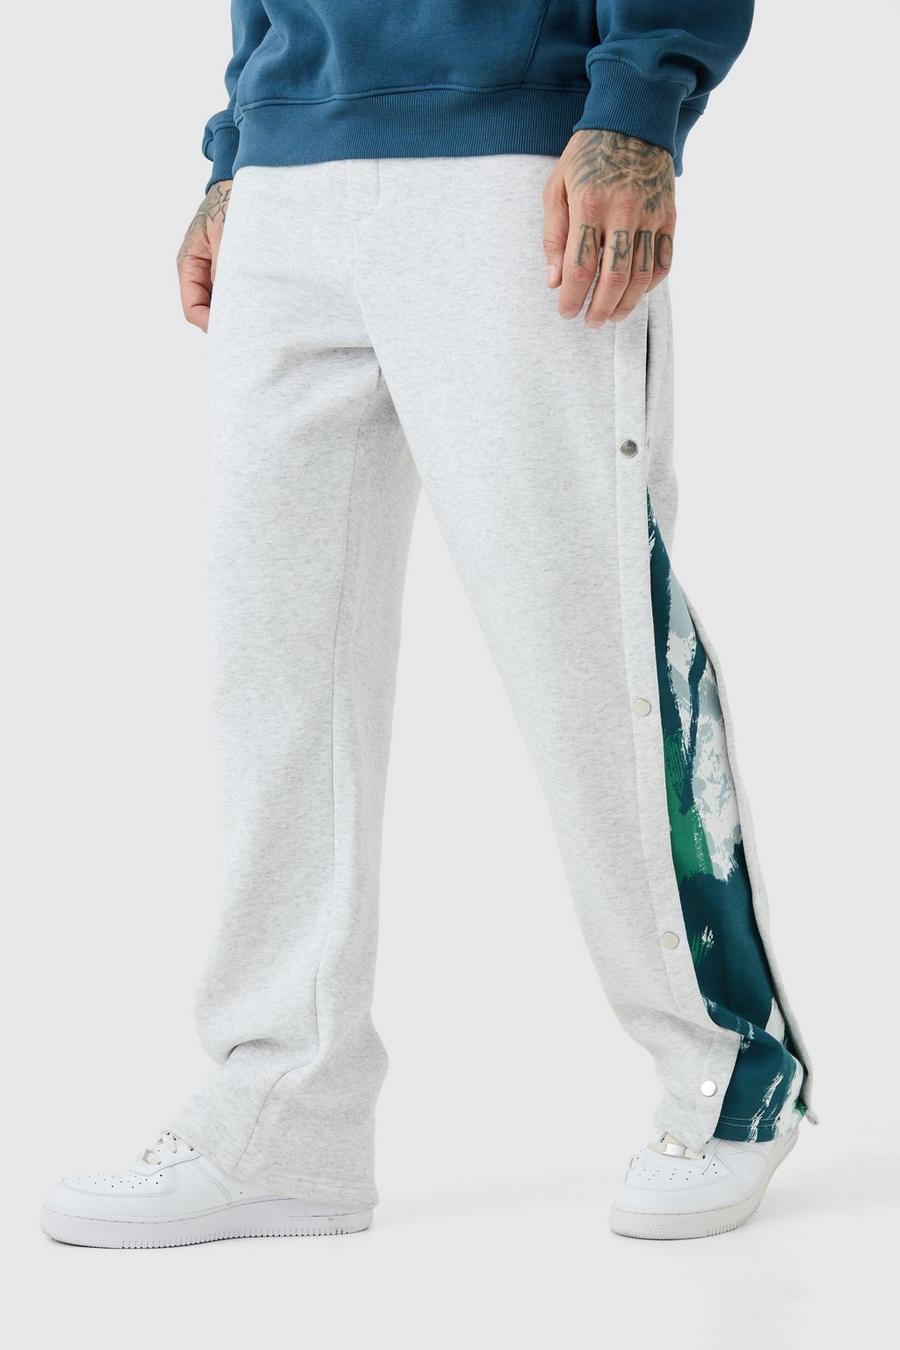 Pantalón deportivo Tall holgado con panel lateral y botones de presión, Ash grey